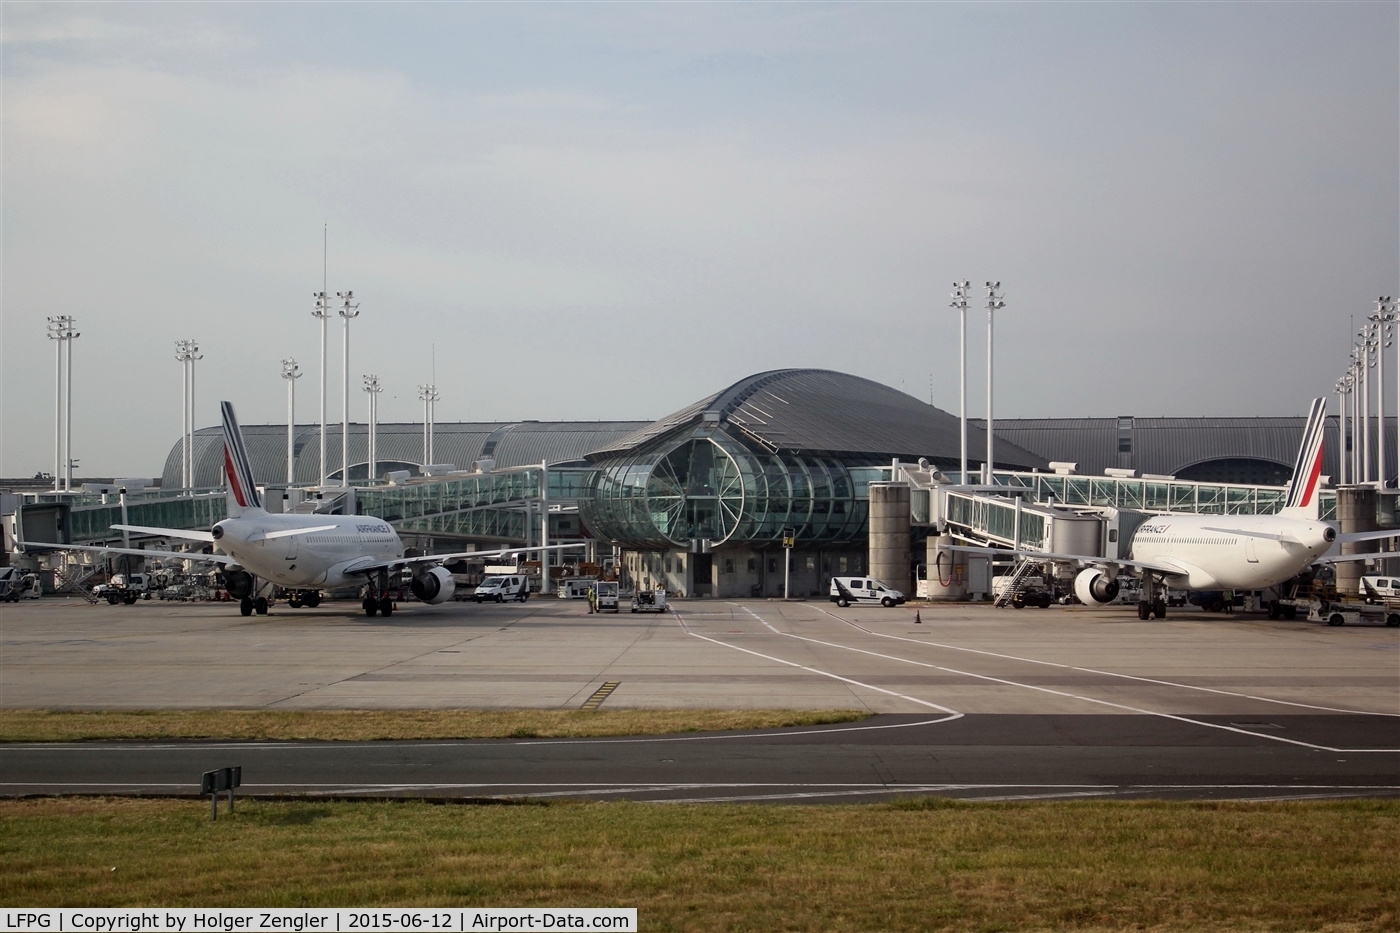 Paris Charles de Gaulle Airport (Roissy Airport), Paris France (LFPG) - At terminal 2...